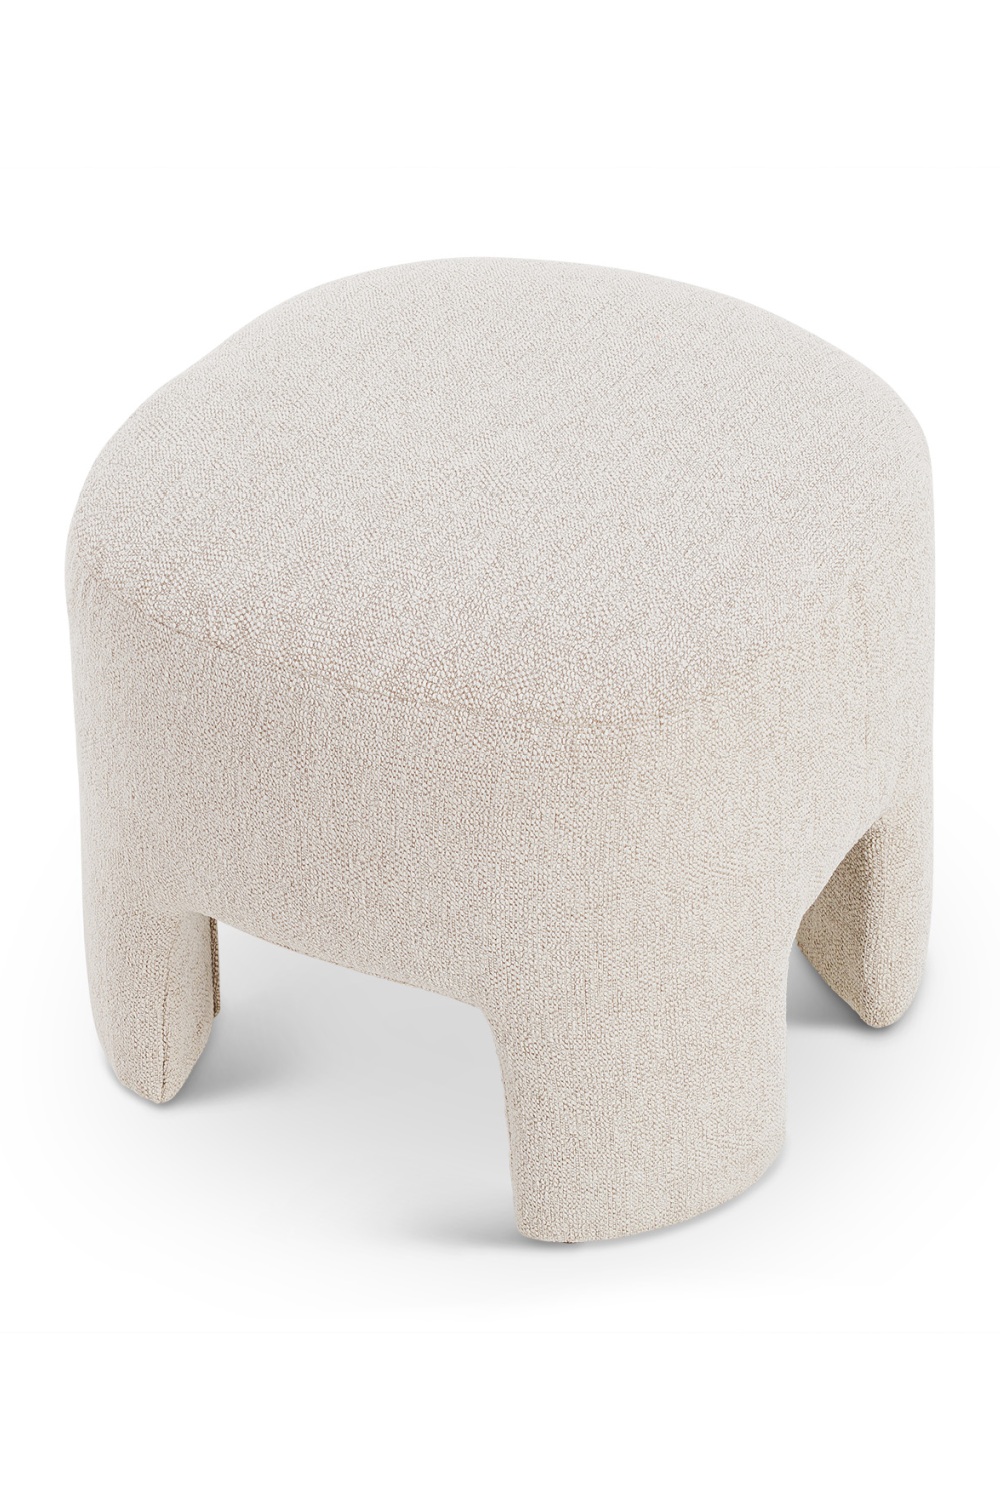 Upholstered Modern Stool | Liang & Eimil Anderson | Oroa.com